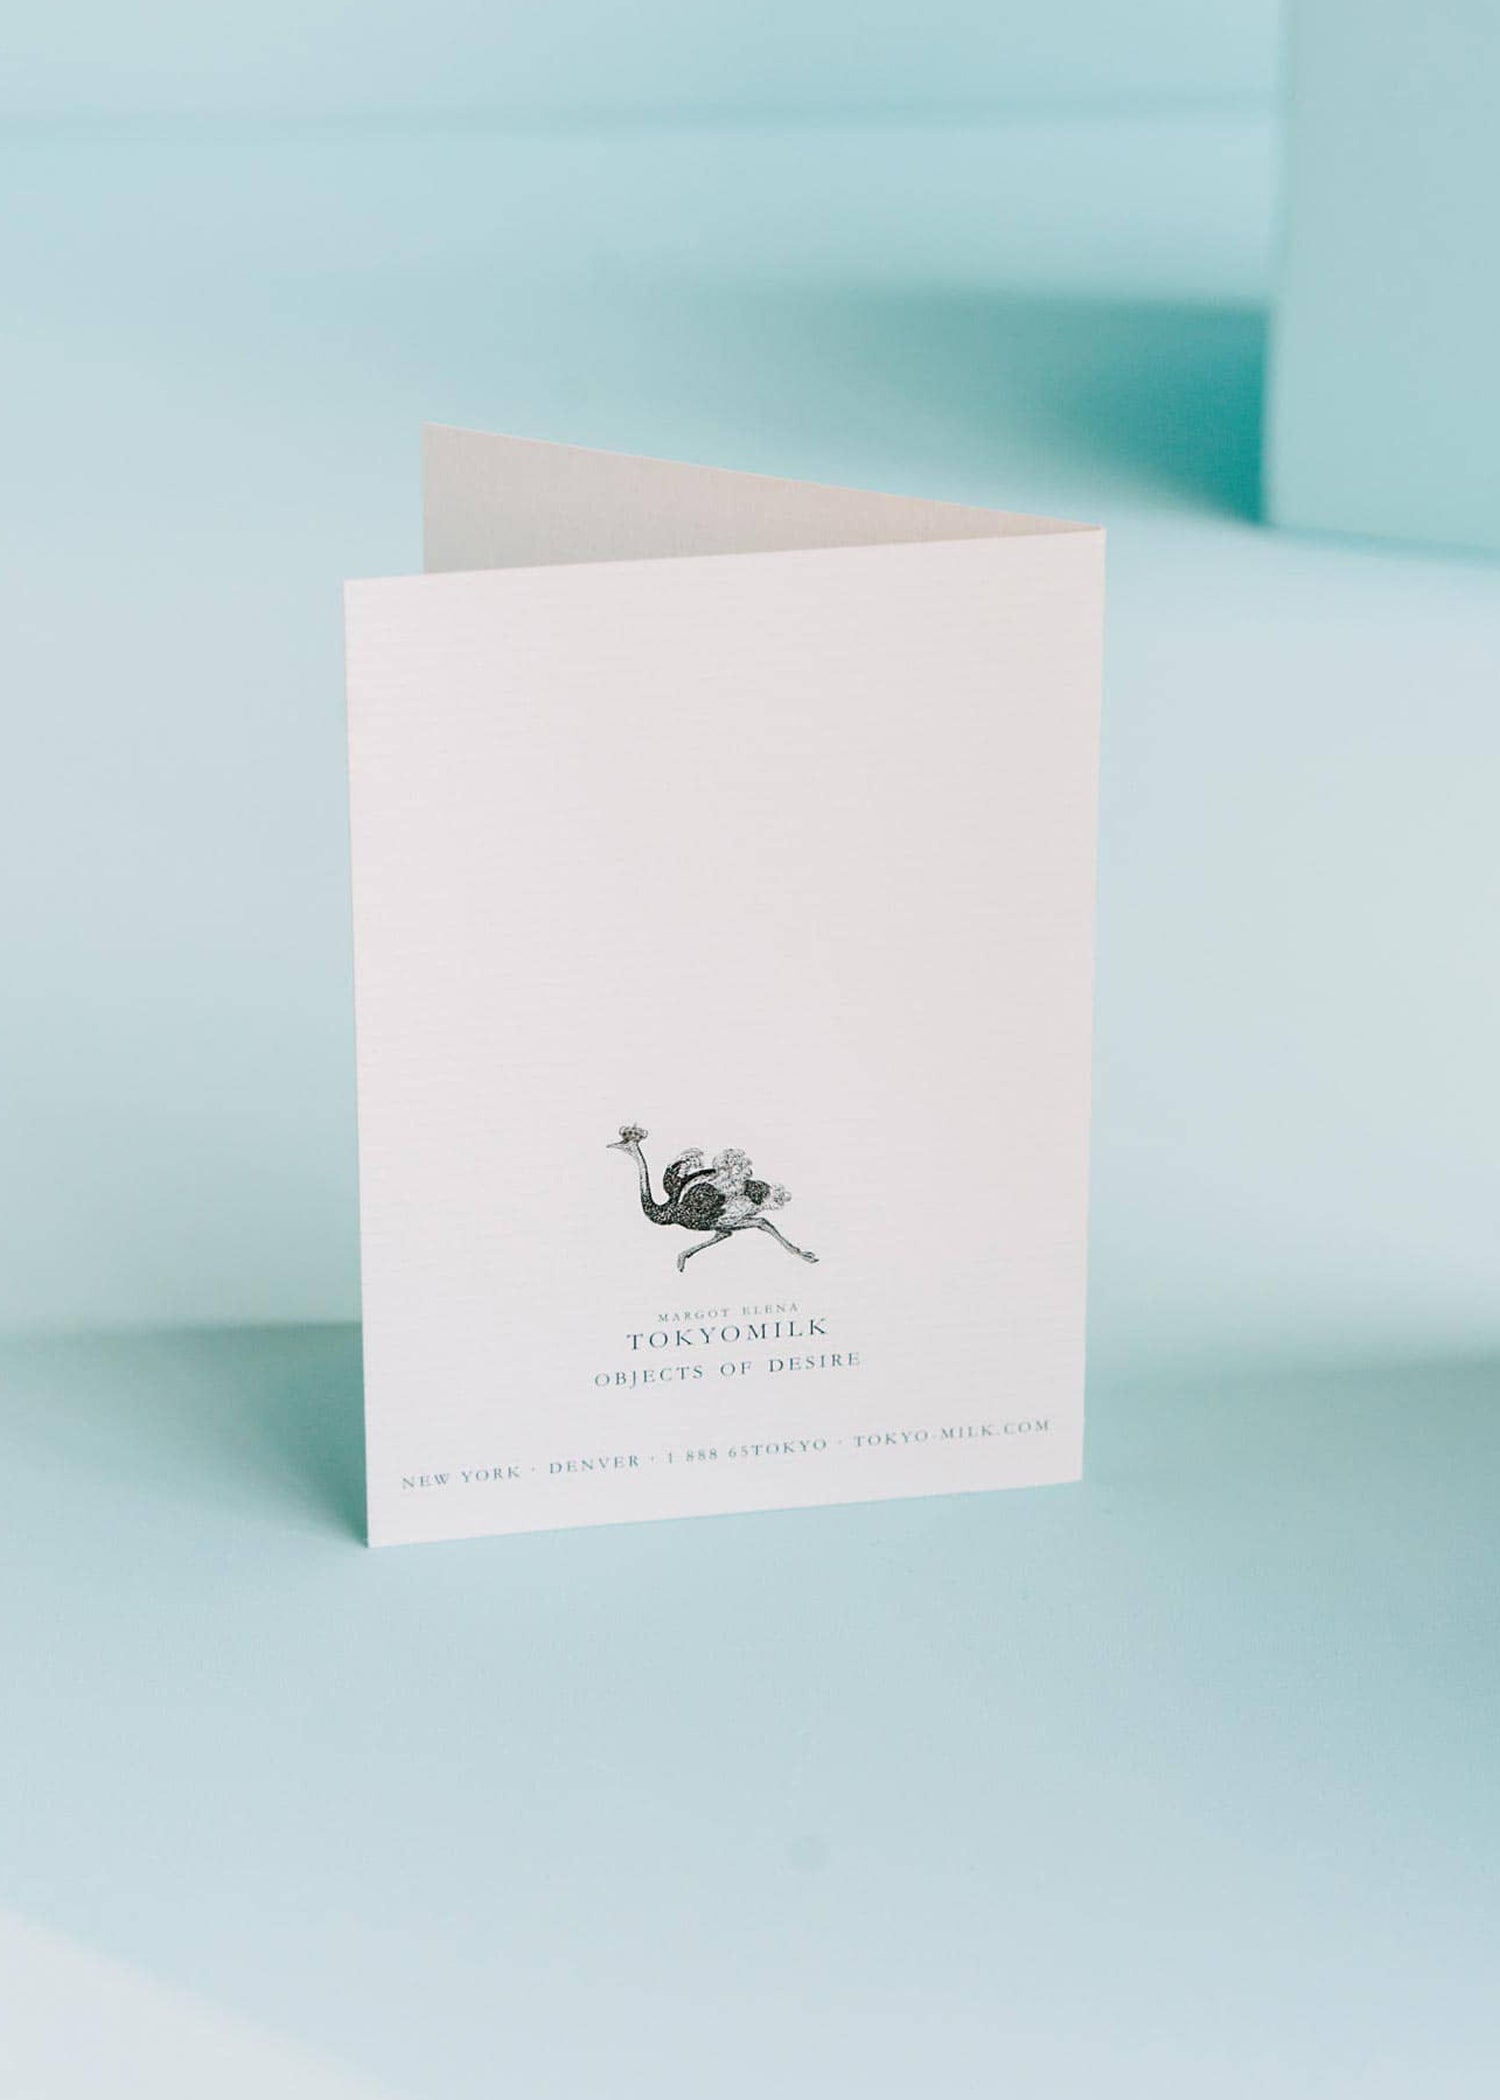 Go Nuts Birthday Glitter Greeting Card – 3.5" x 5"